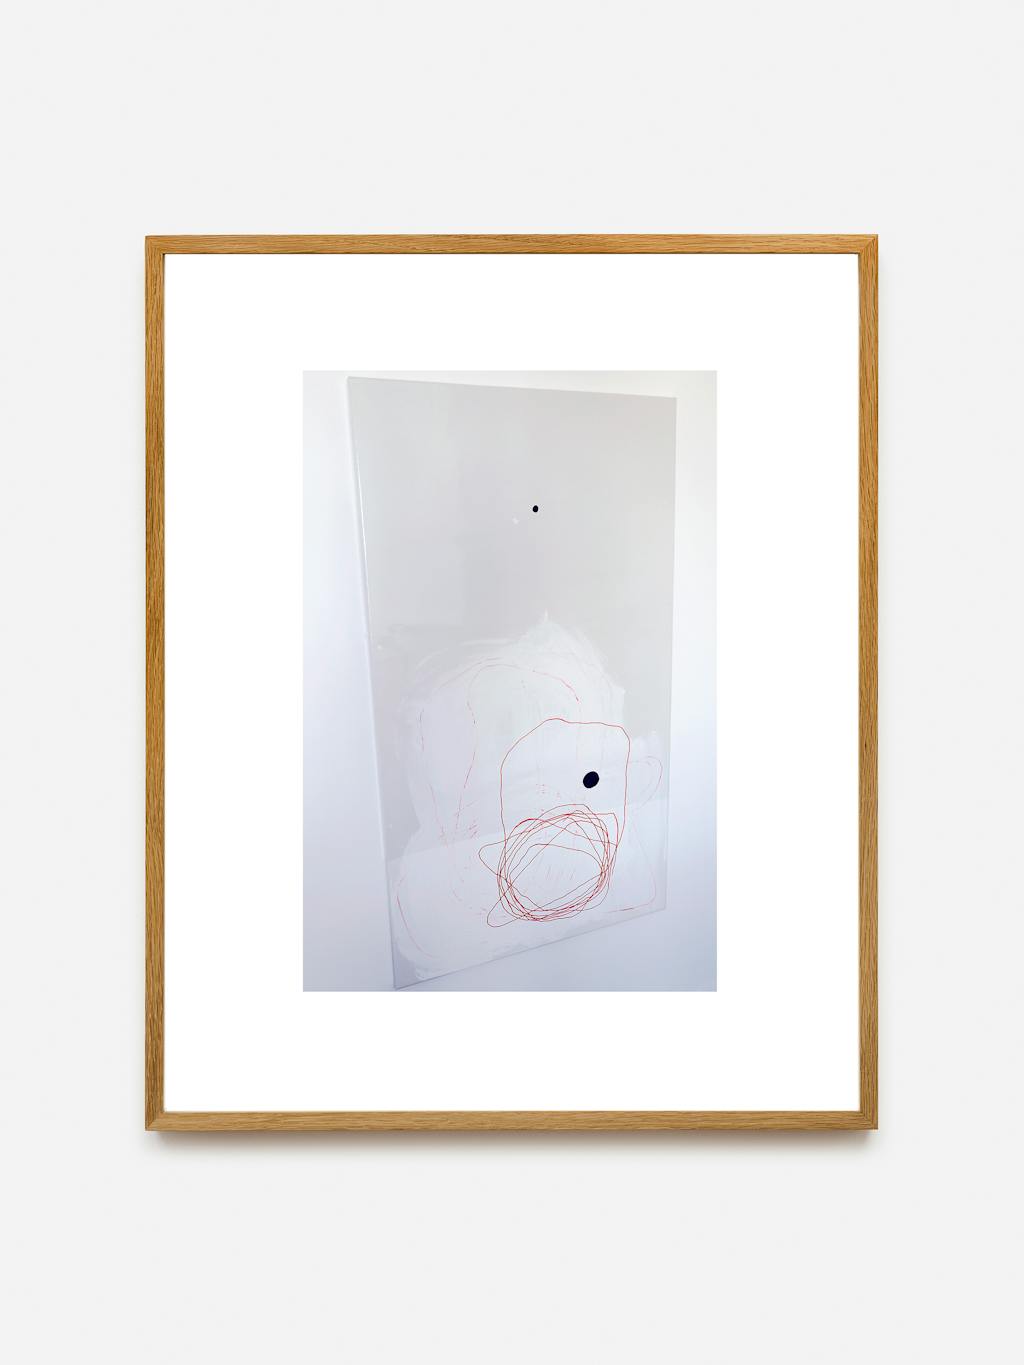 Jesper List Thomsen, Untitled (2nxcccy), 2019 , C-type print, artist frame, 56 x 46 cm - © Paris Internationale